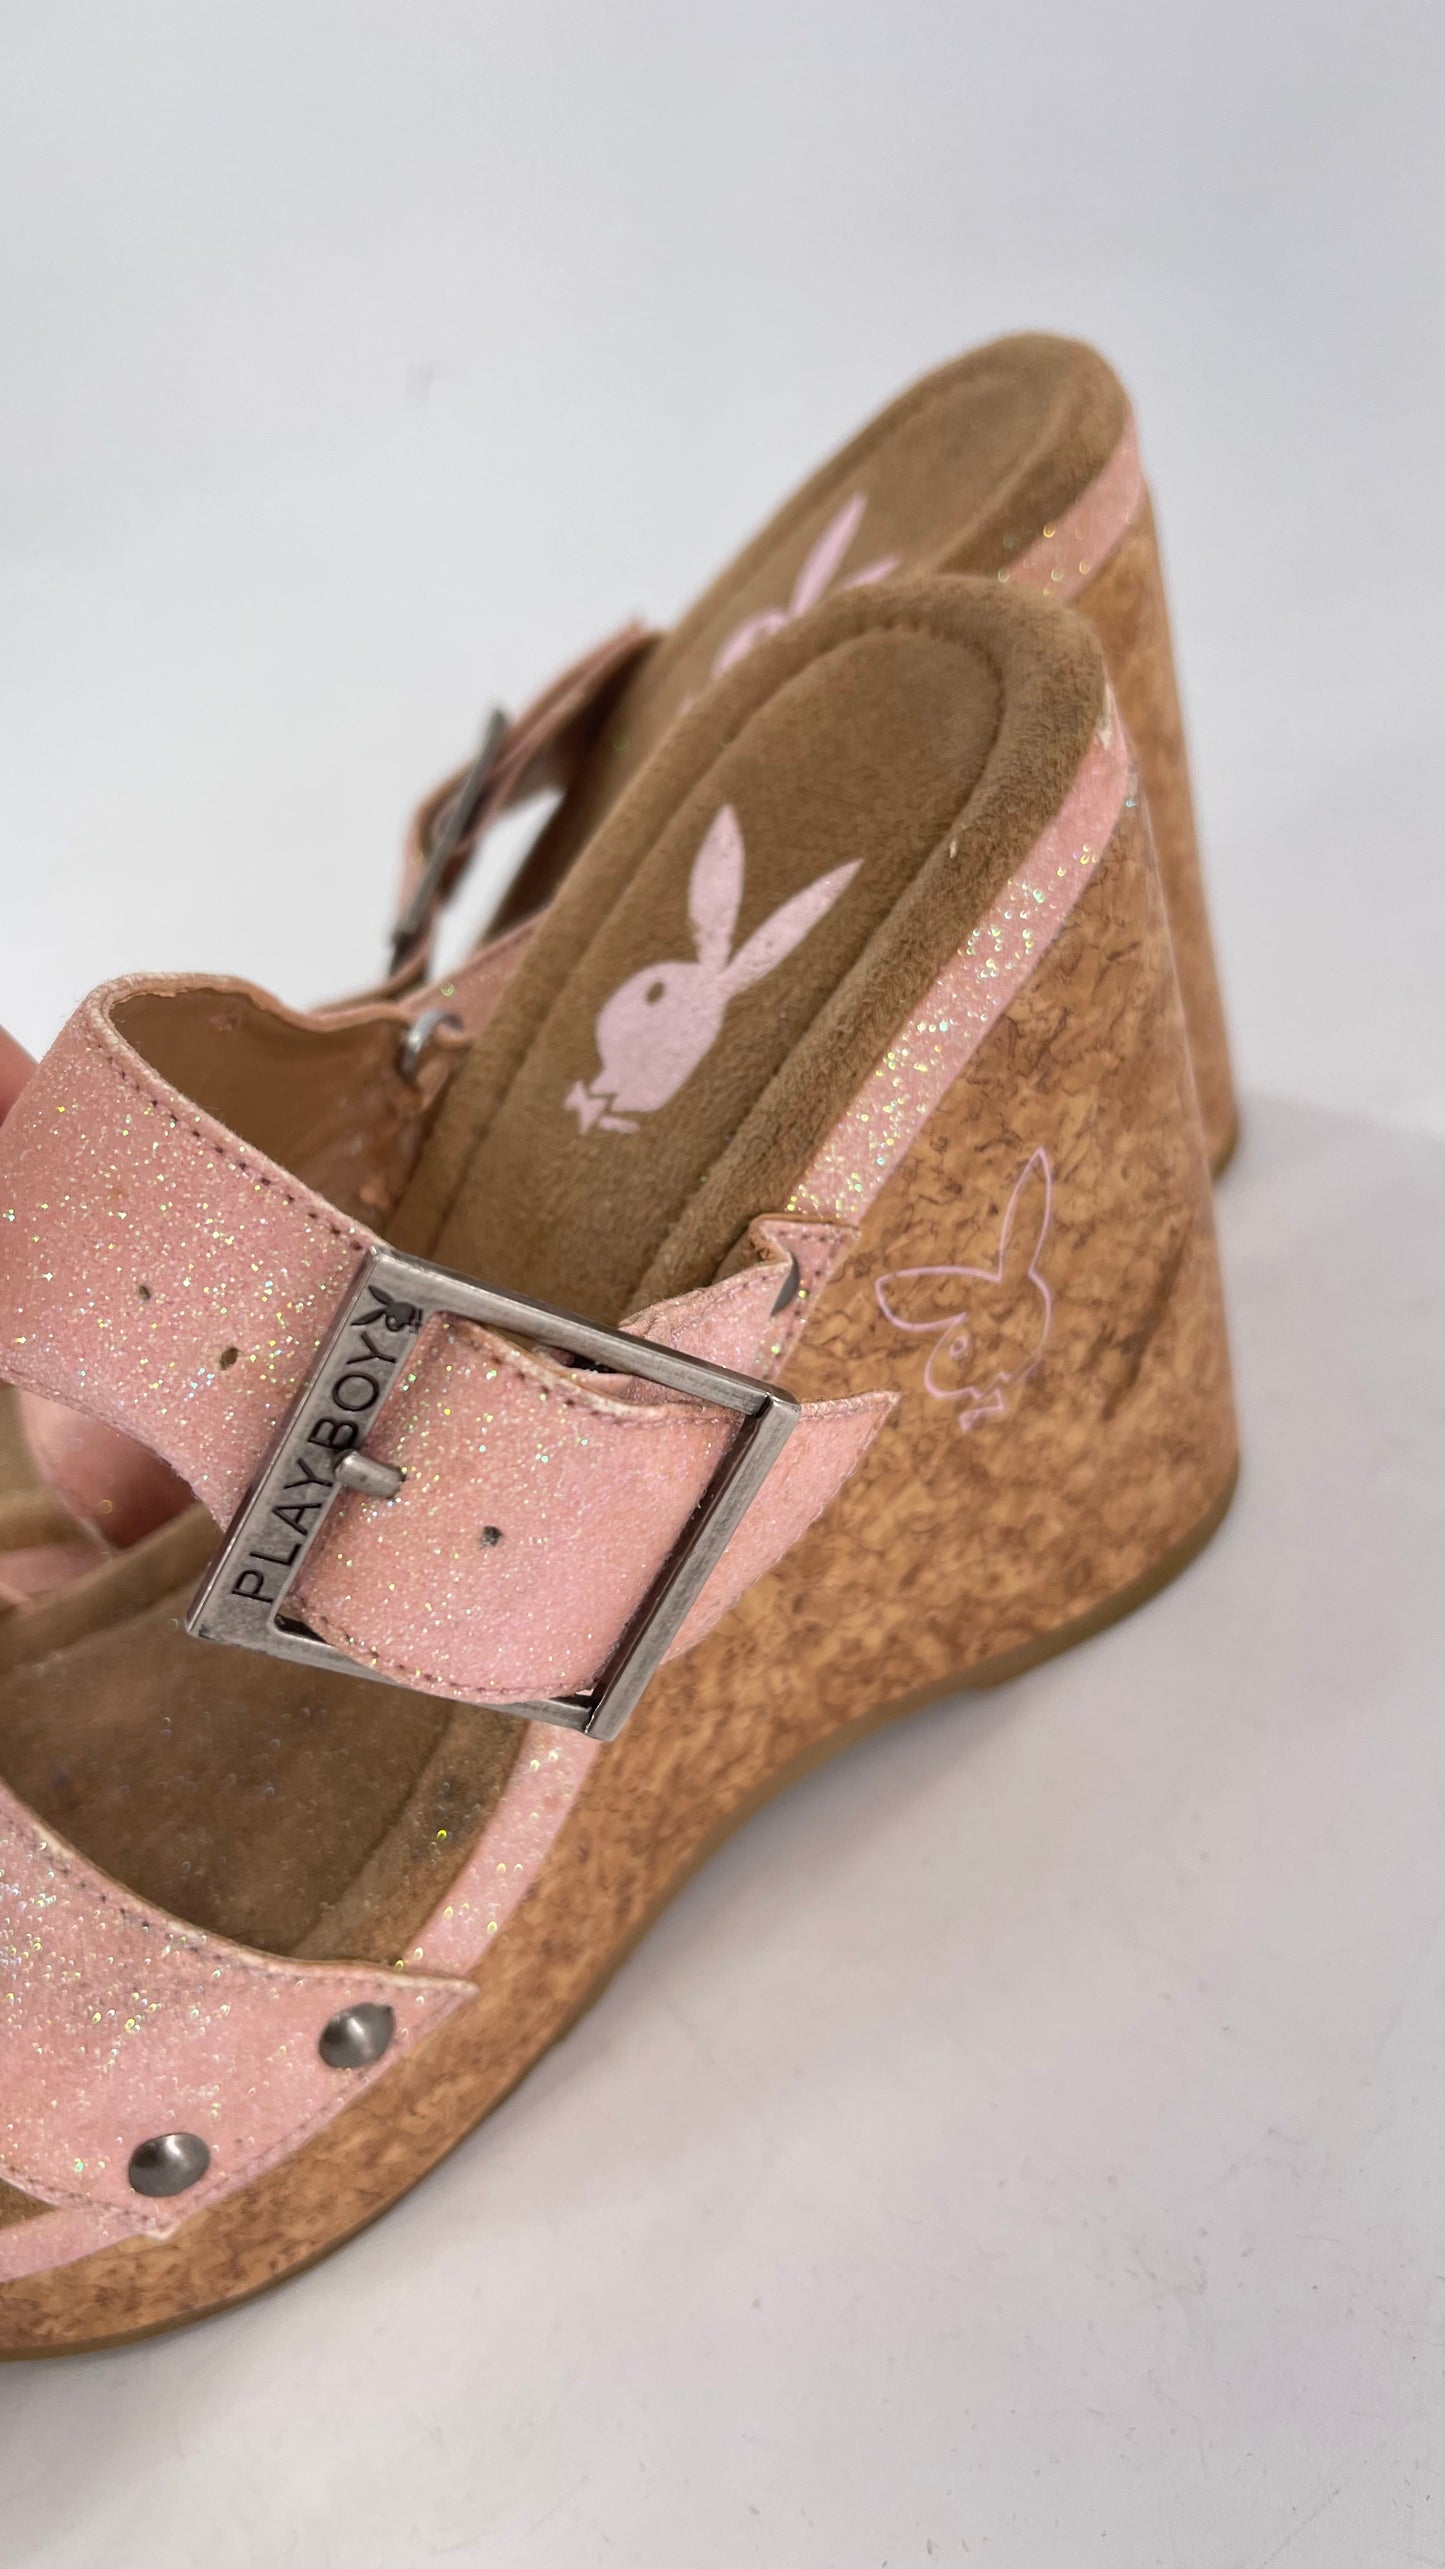 Playboy Pink Glitter Wedge Heel with Cork Heel and Playboy Engraved Buckle (6)